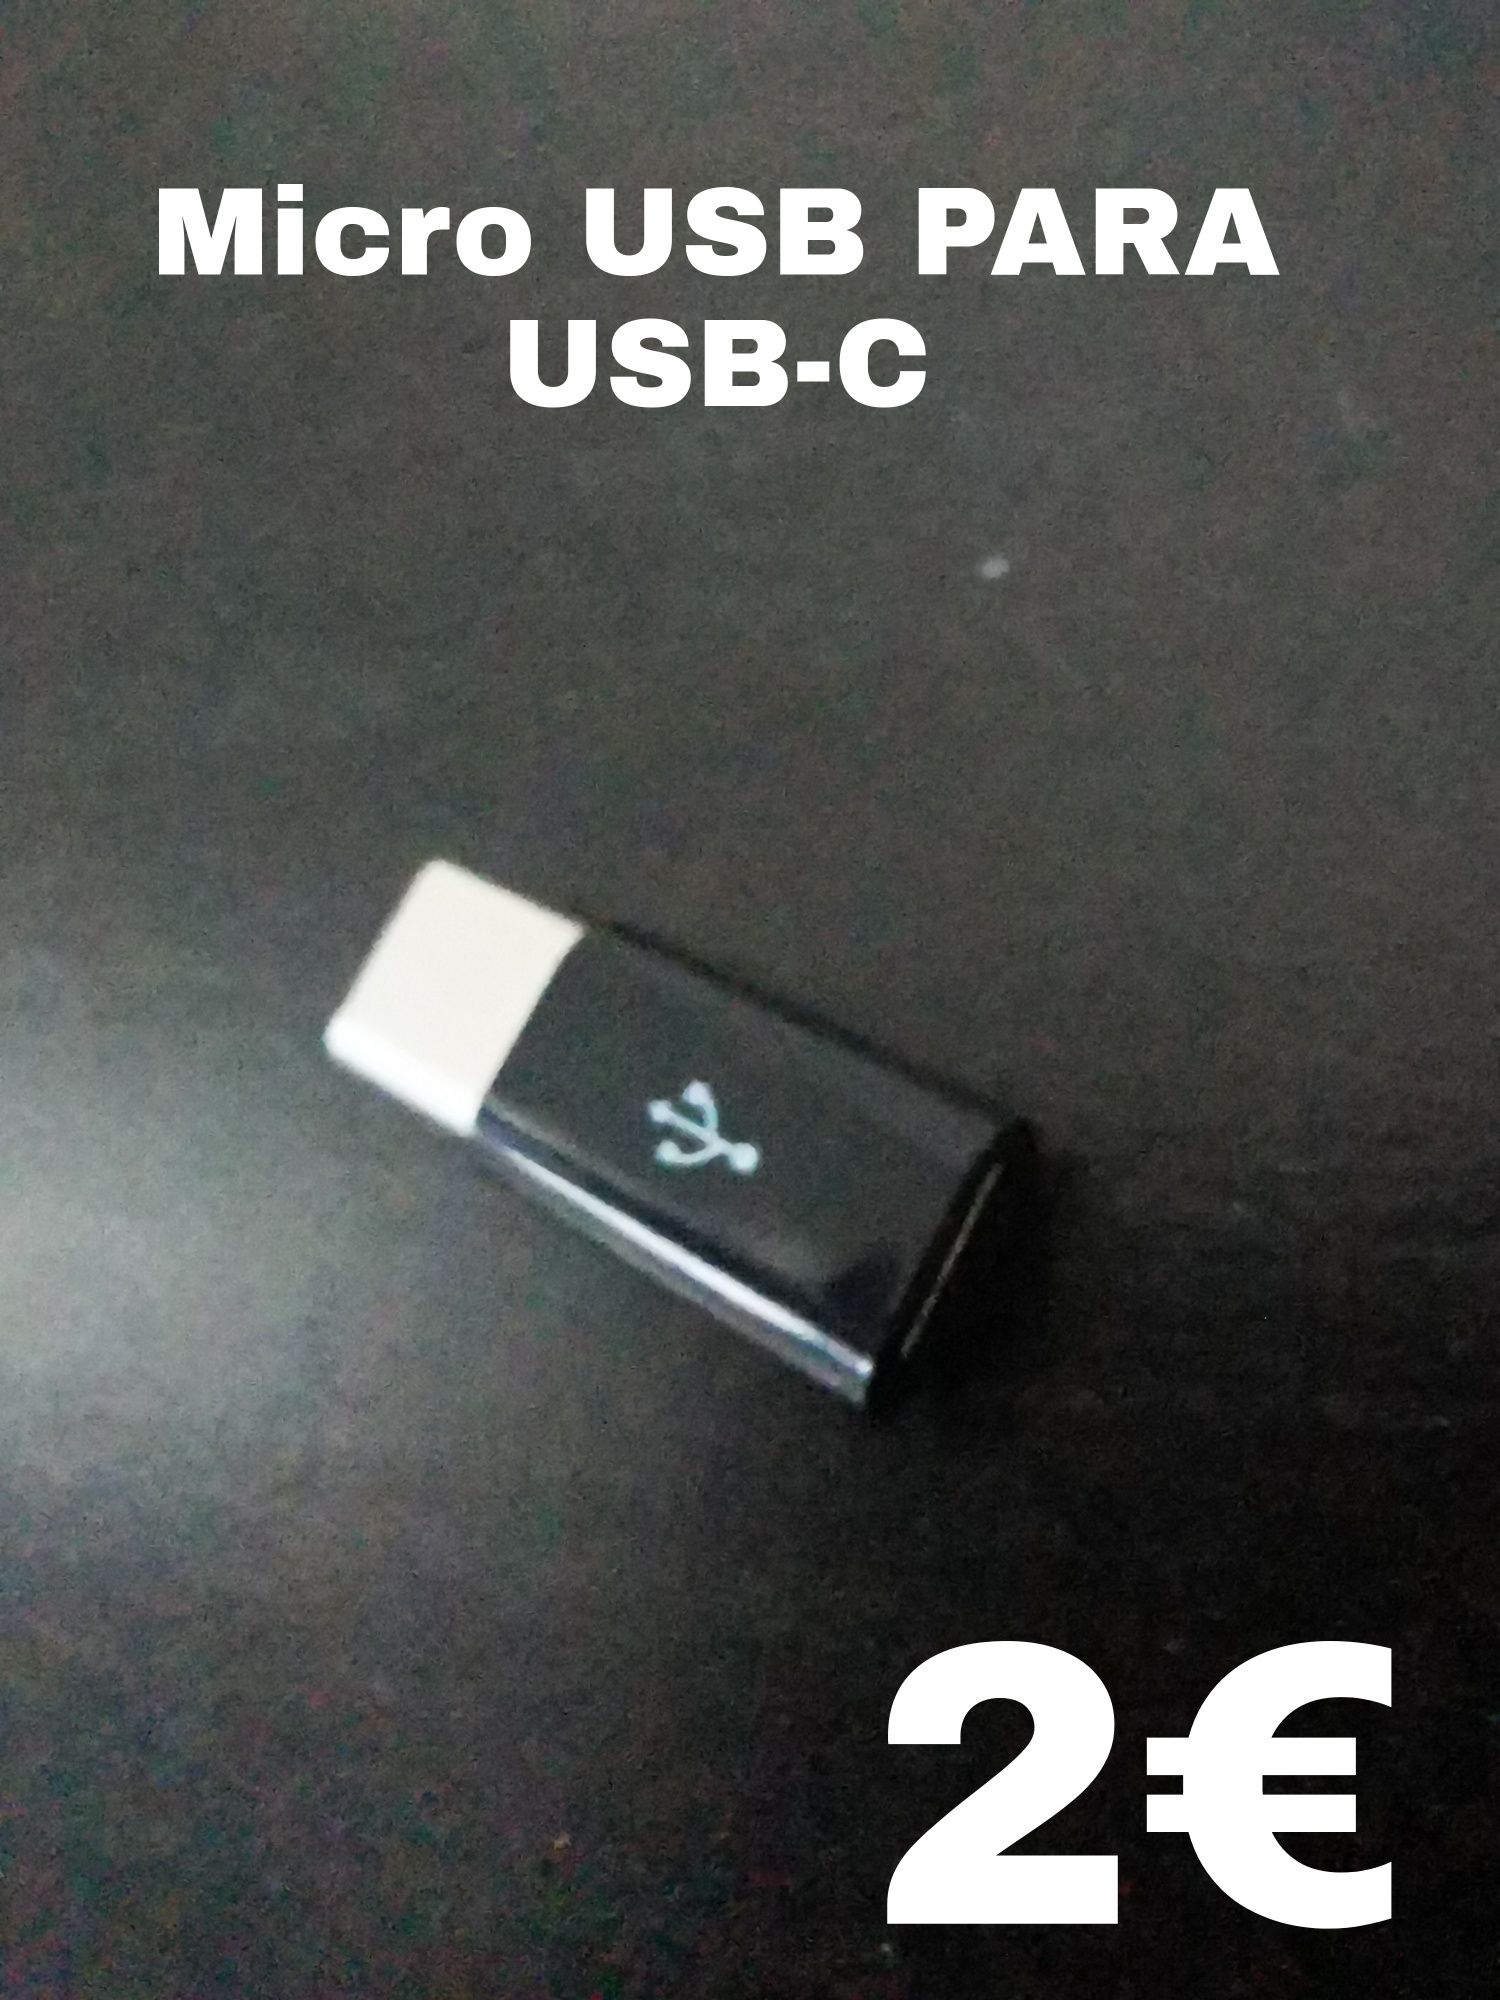 Adaptador Micro USB para Type-C